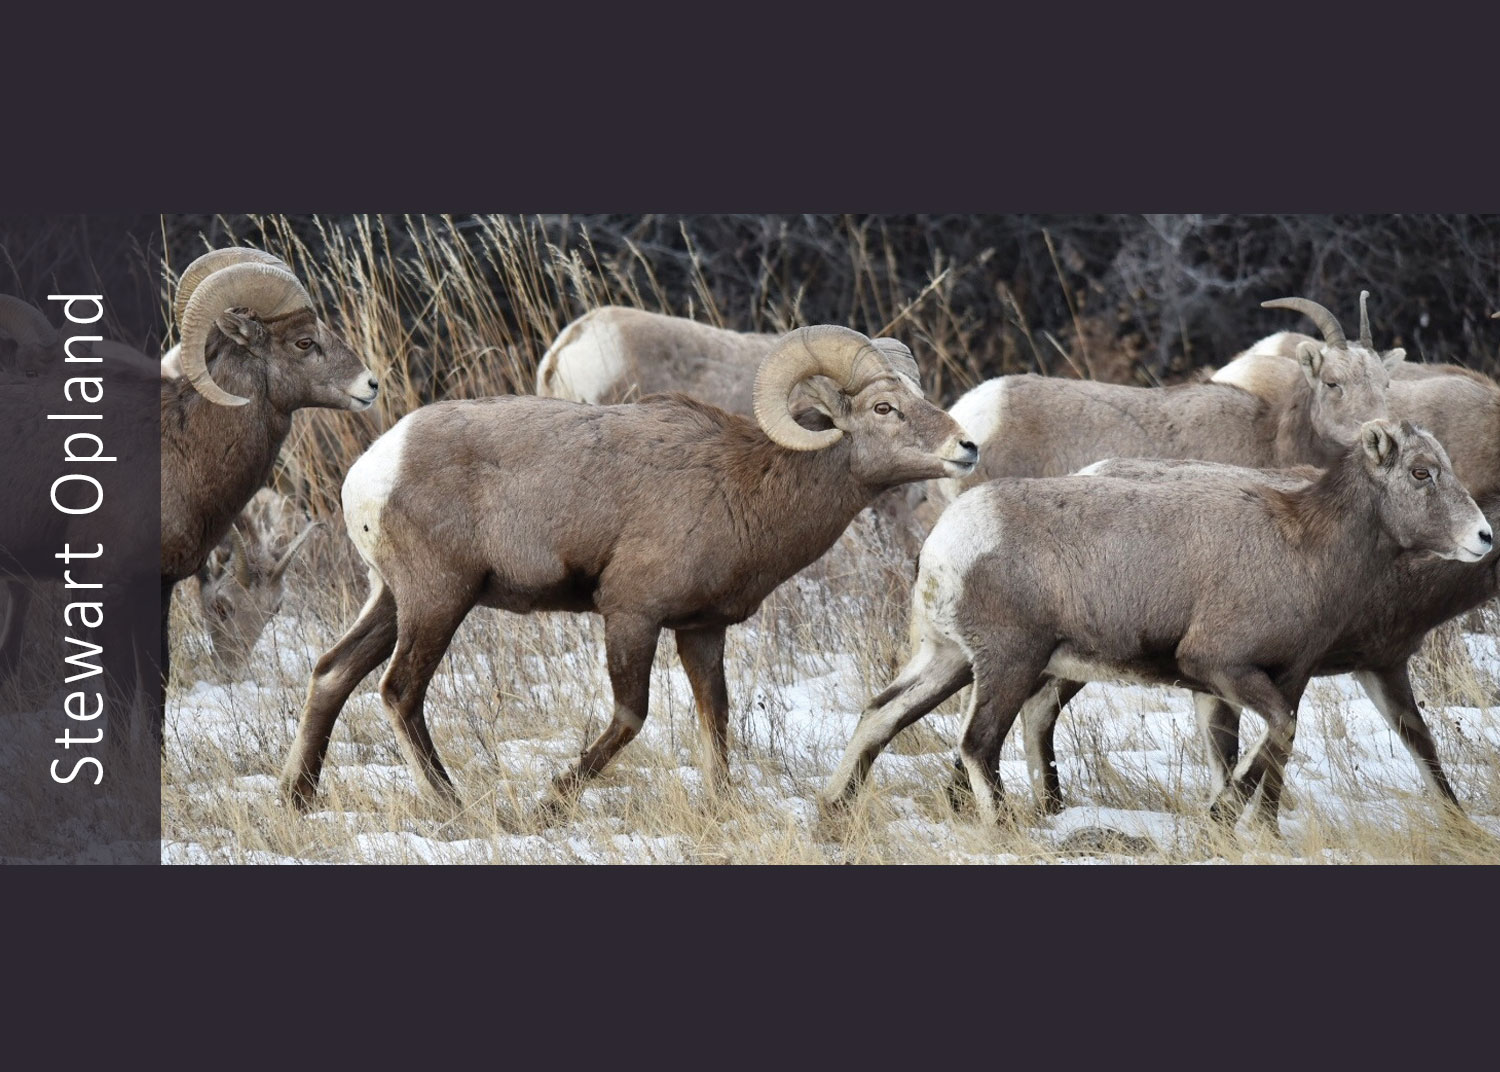 Group of bighorn sheep